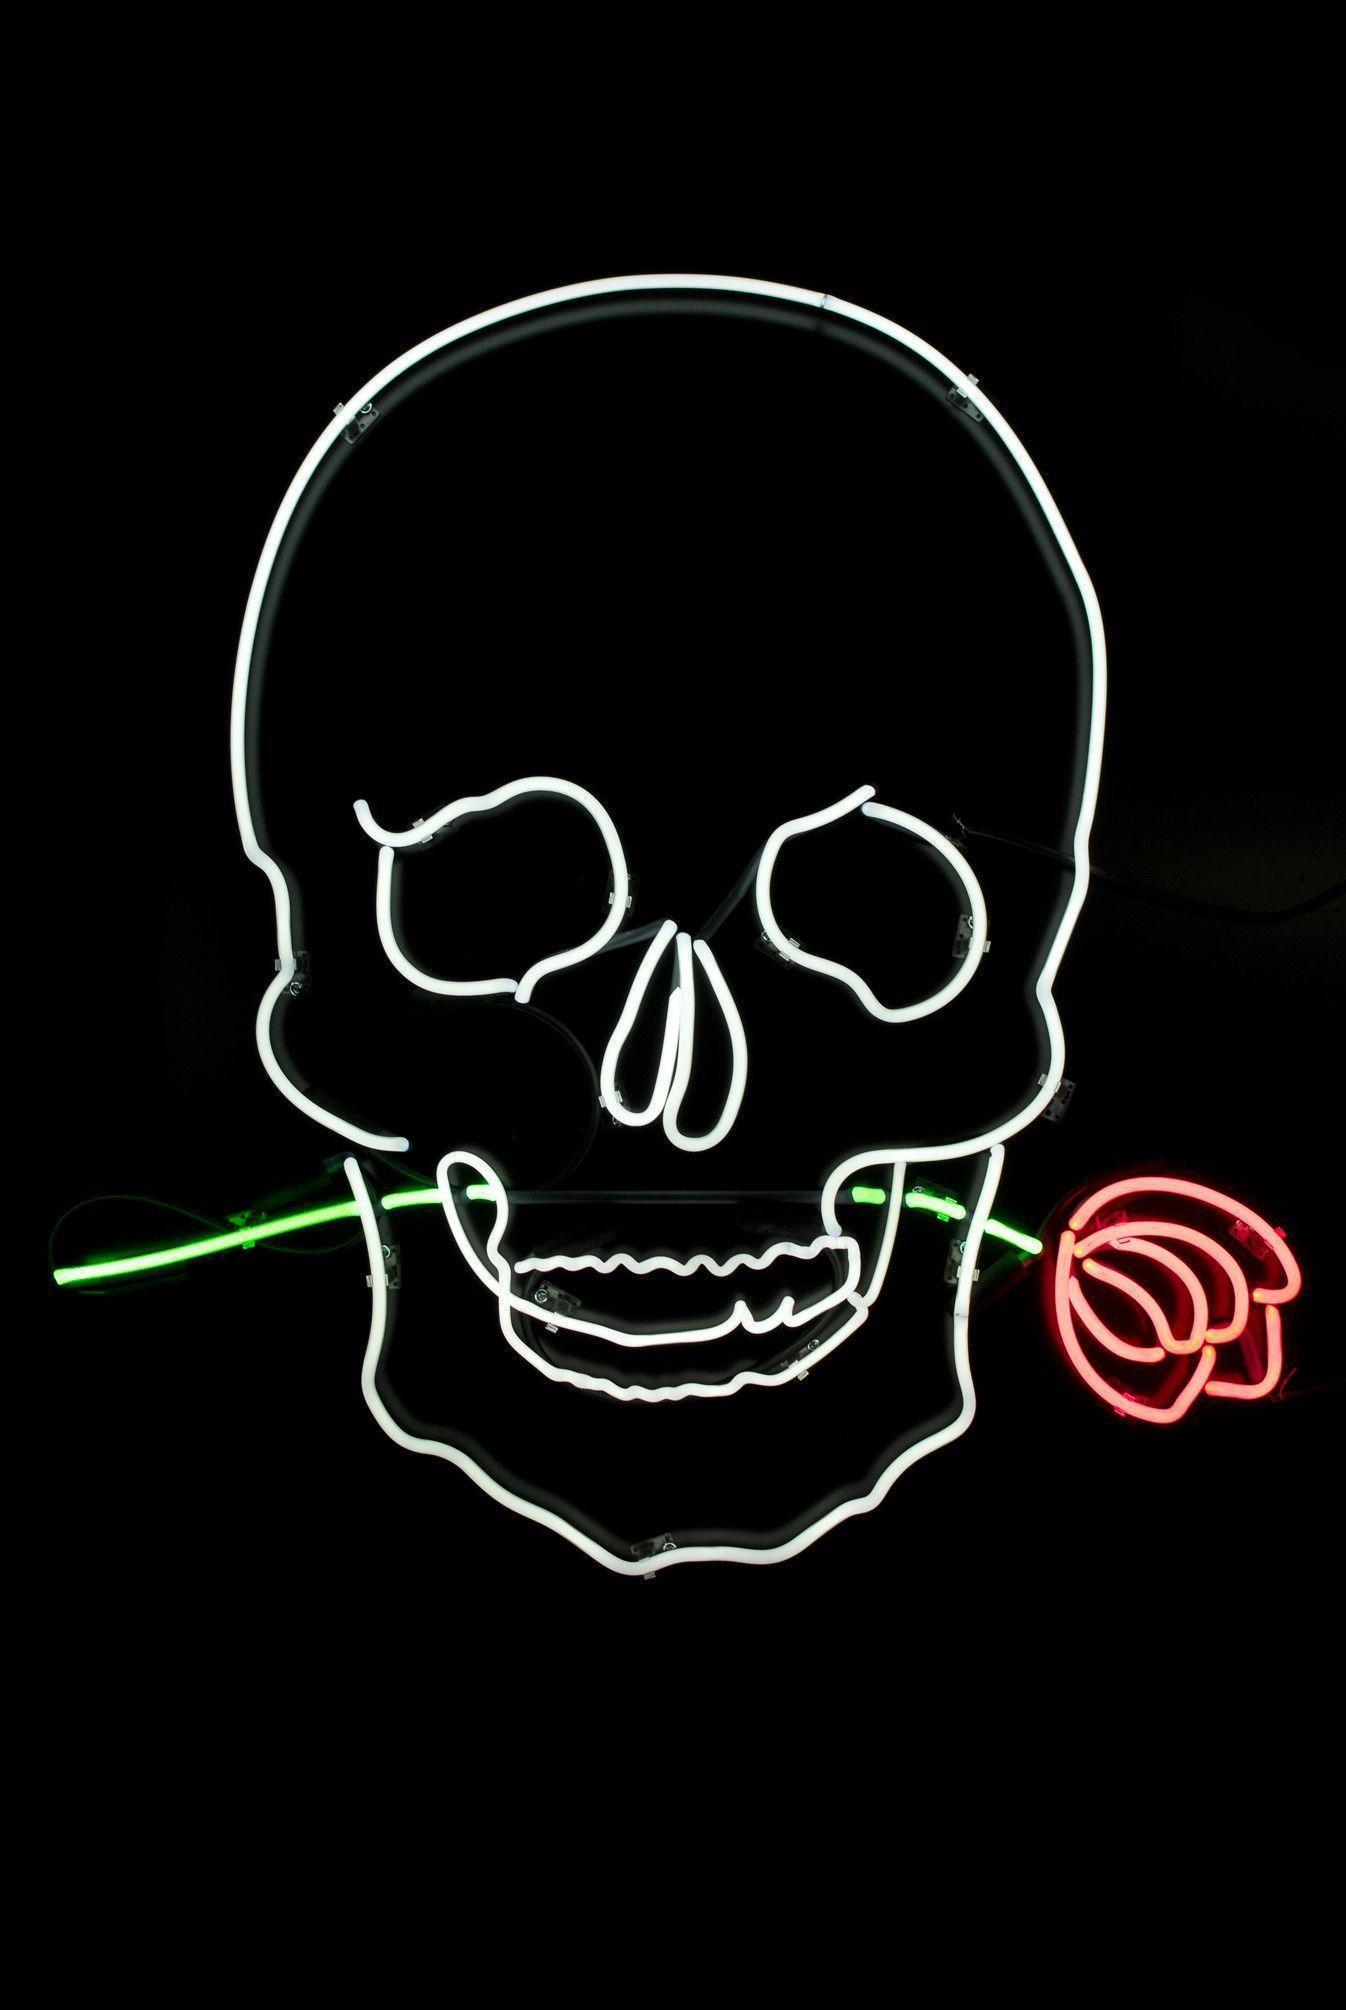 Black Skull with Rose Wallpaper .wallpaperaccess.com